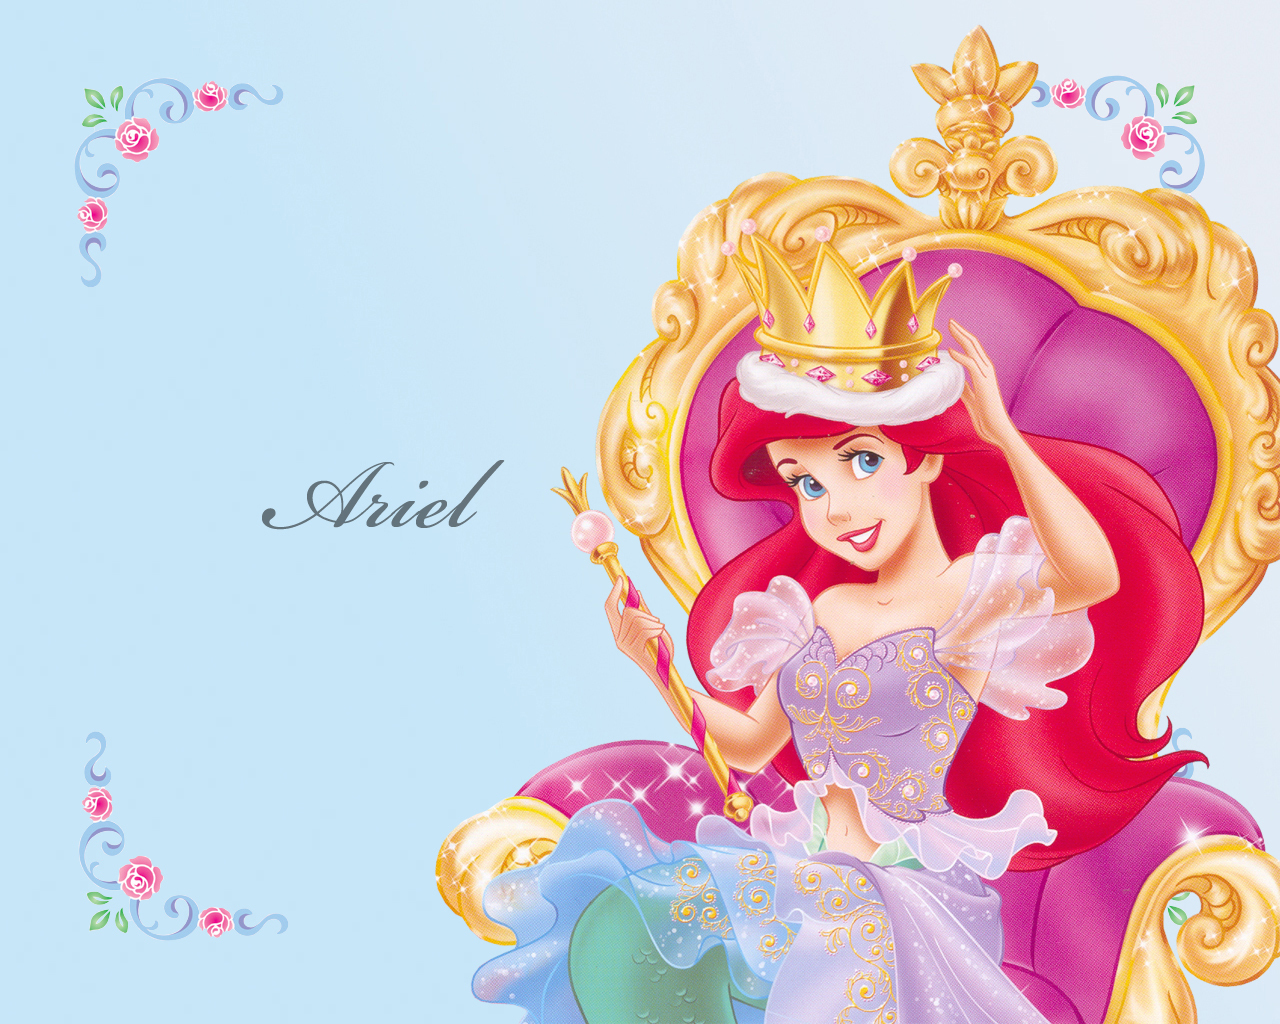 Disney Princess Wallpaper Picture Image Desktop